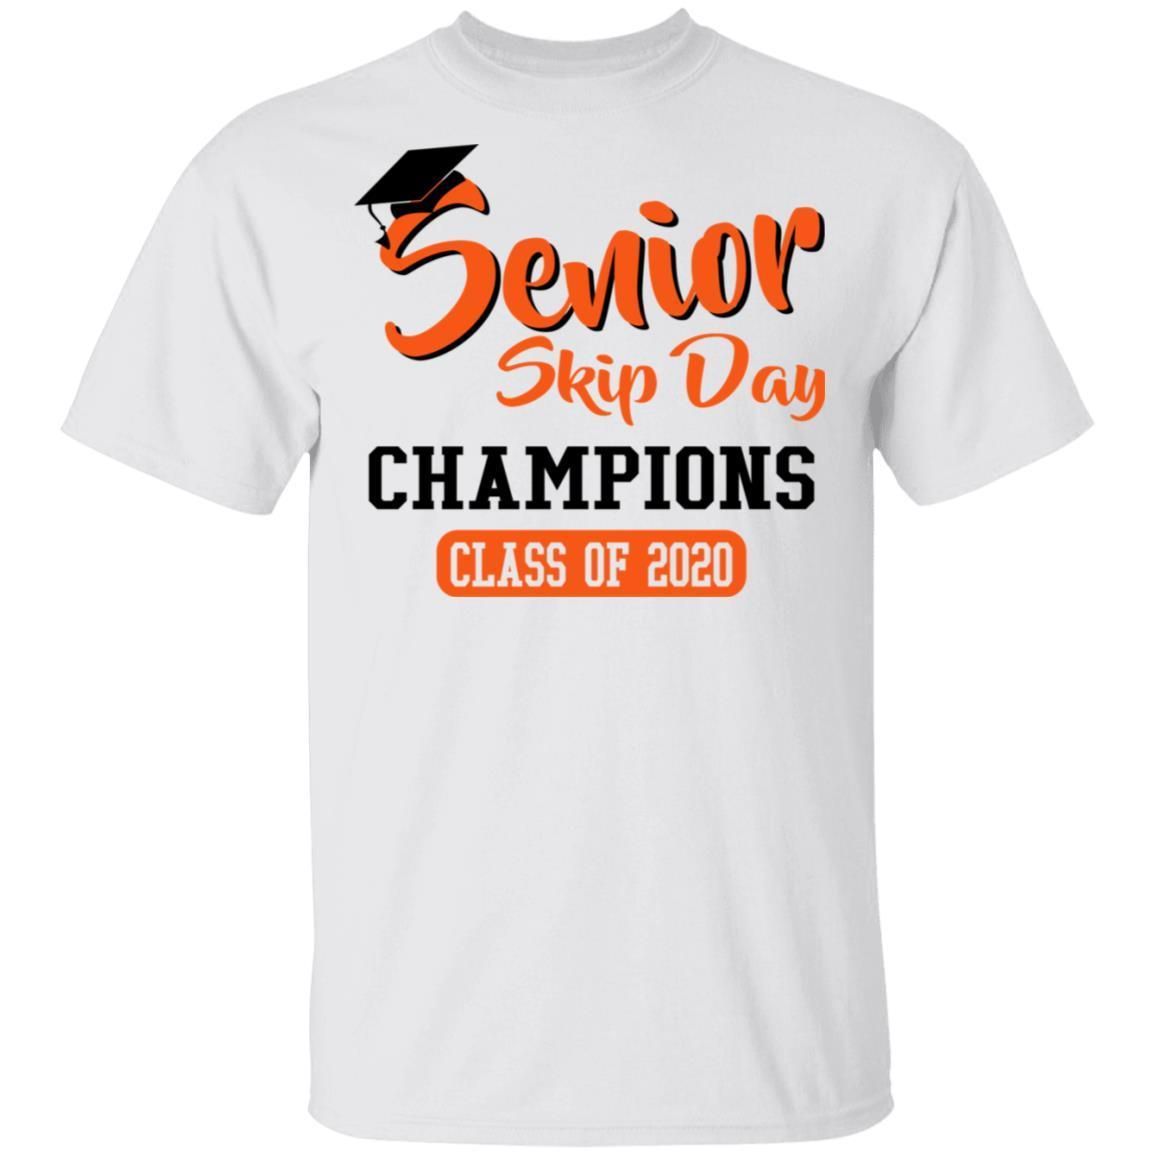 Senior Skip Day Champions Class Of 2020 tshirts